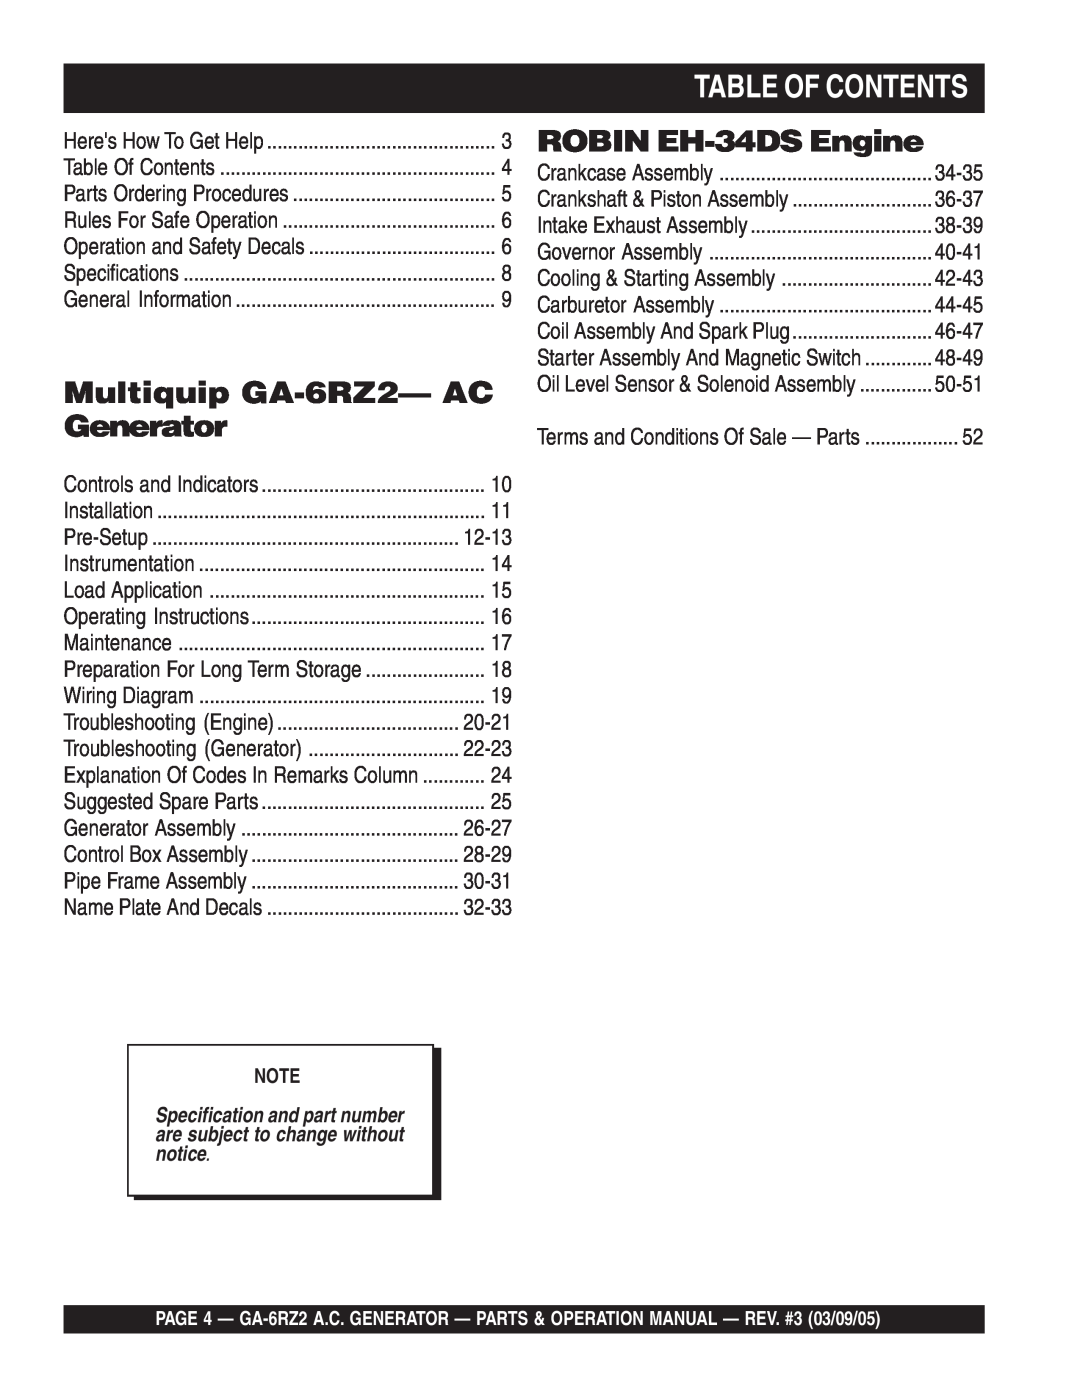 Multiquip operation manual Table Of Contents, Multiquip GA-6RZ2-AC Generator, ROBIN EH-34DSEngine 